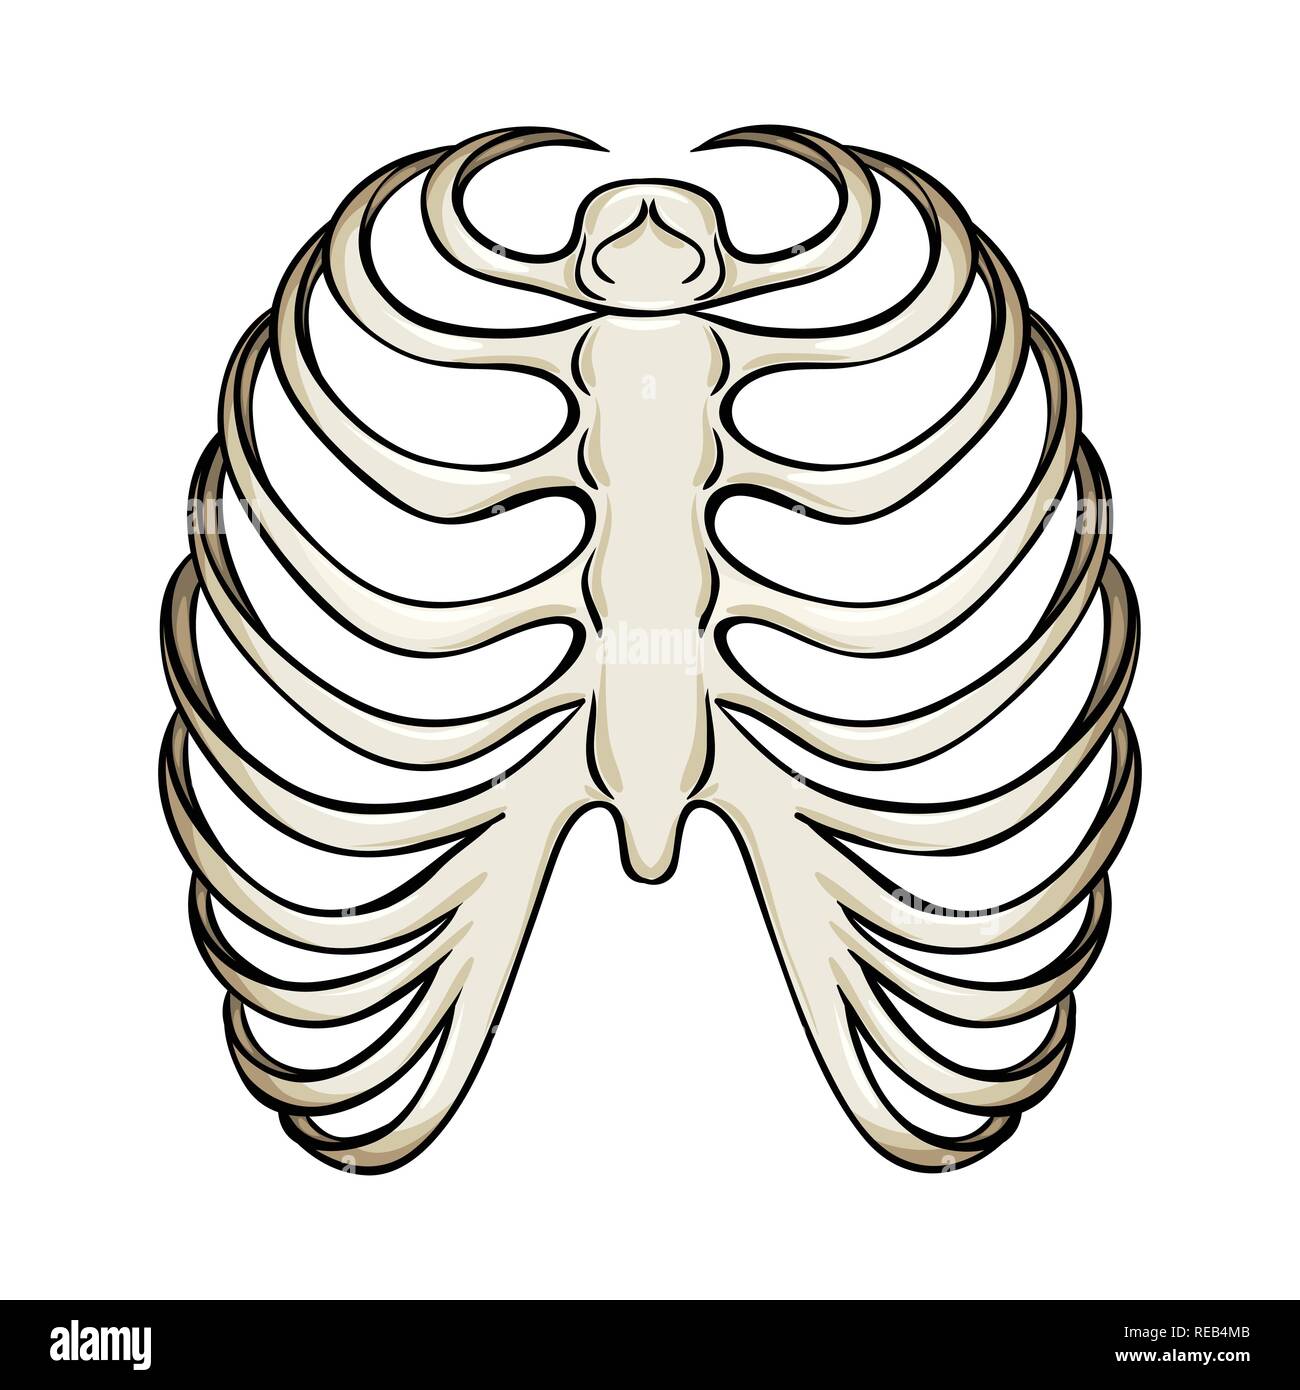 Rib Cage Xray Body Spine Sternum Breastbone Calcium Surgery Bone Skeleton Anatomy Human Organs